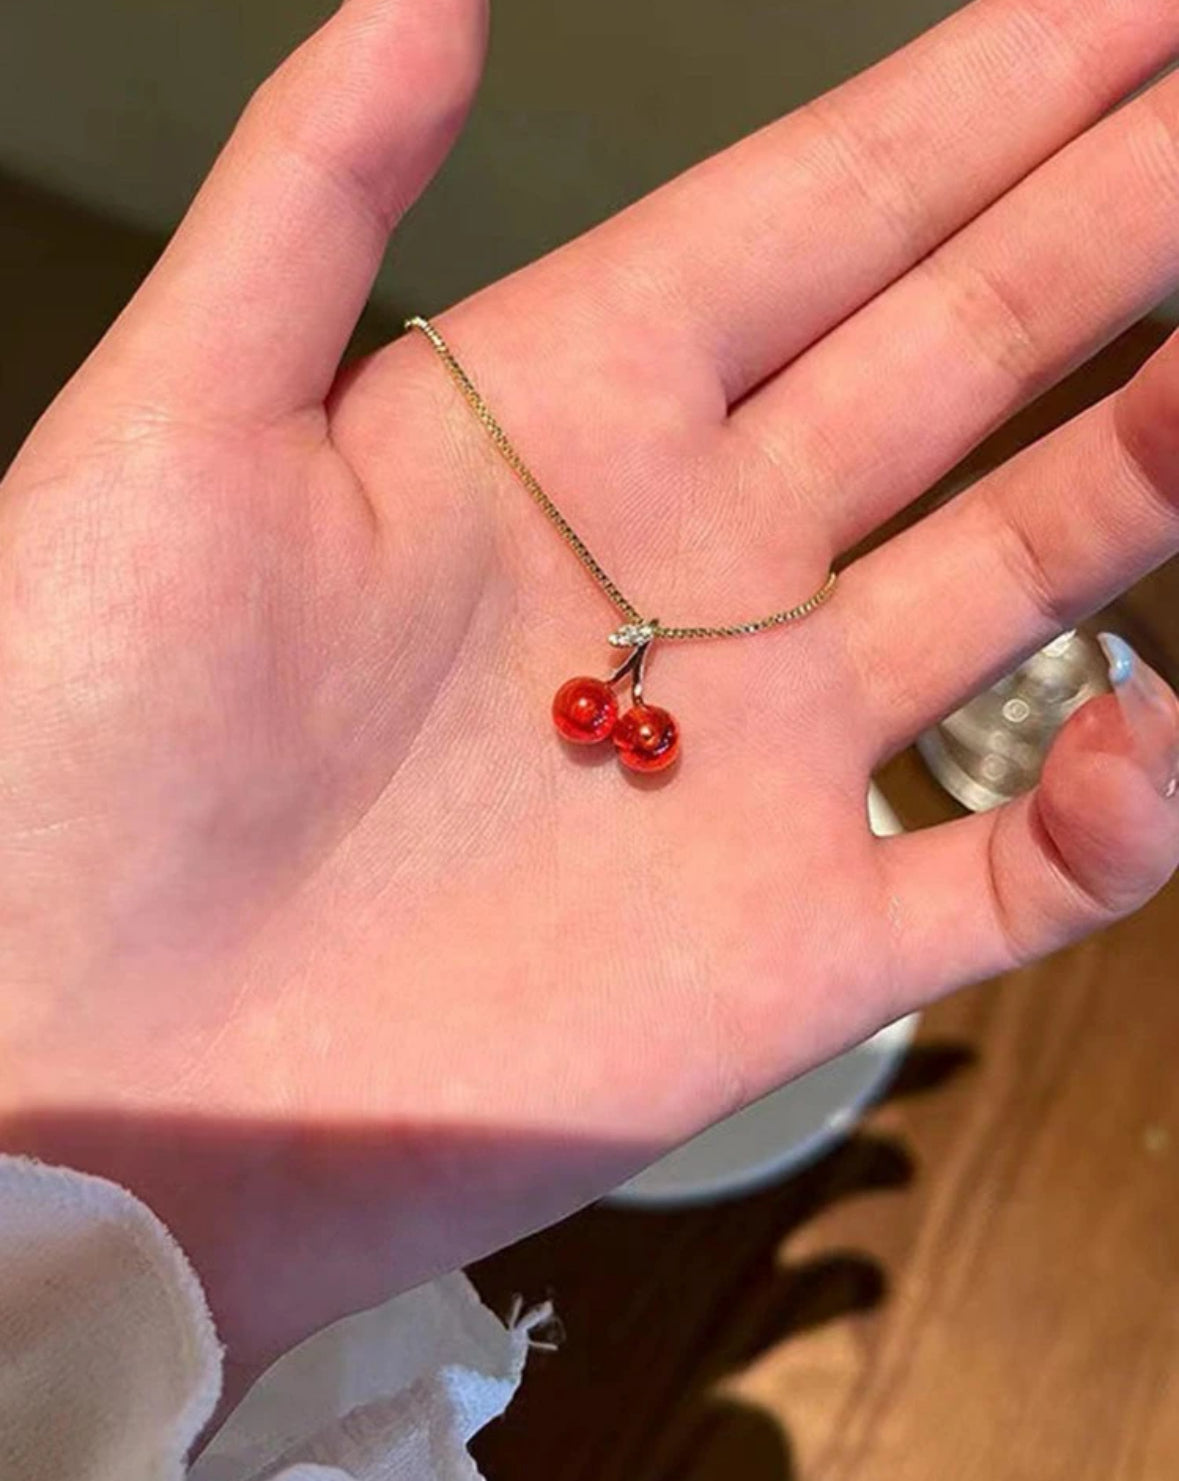 Cherry 🍒 charm necklace